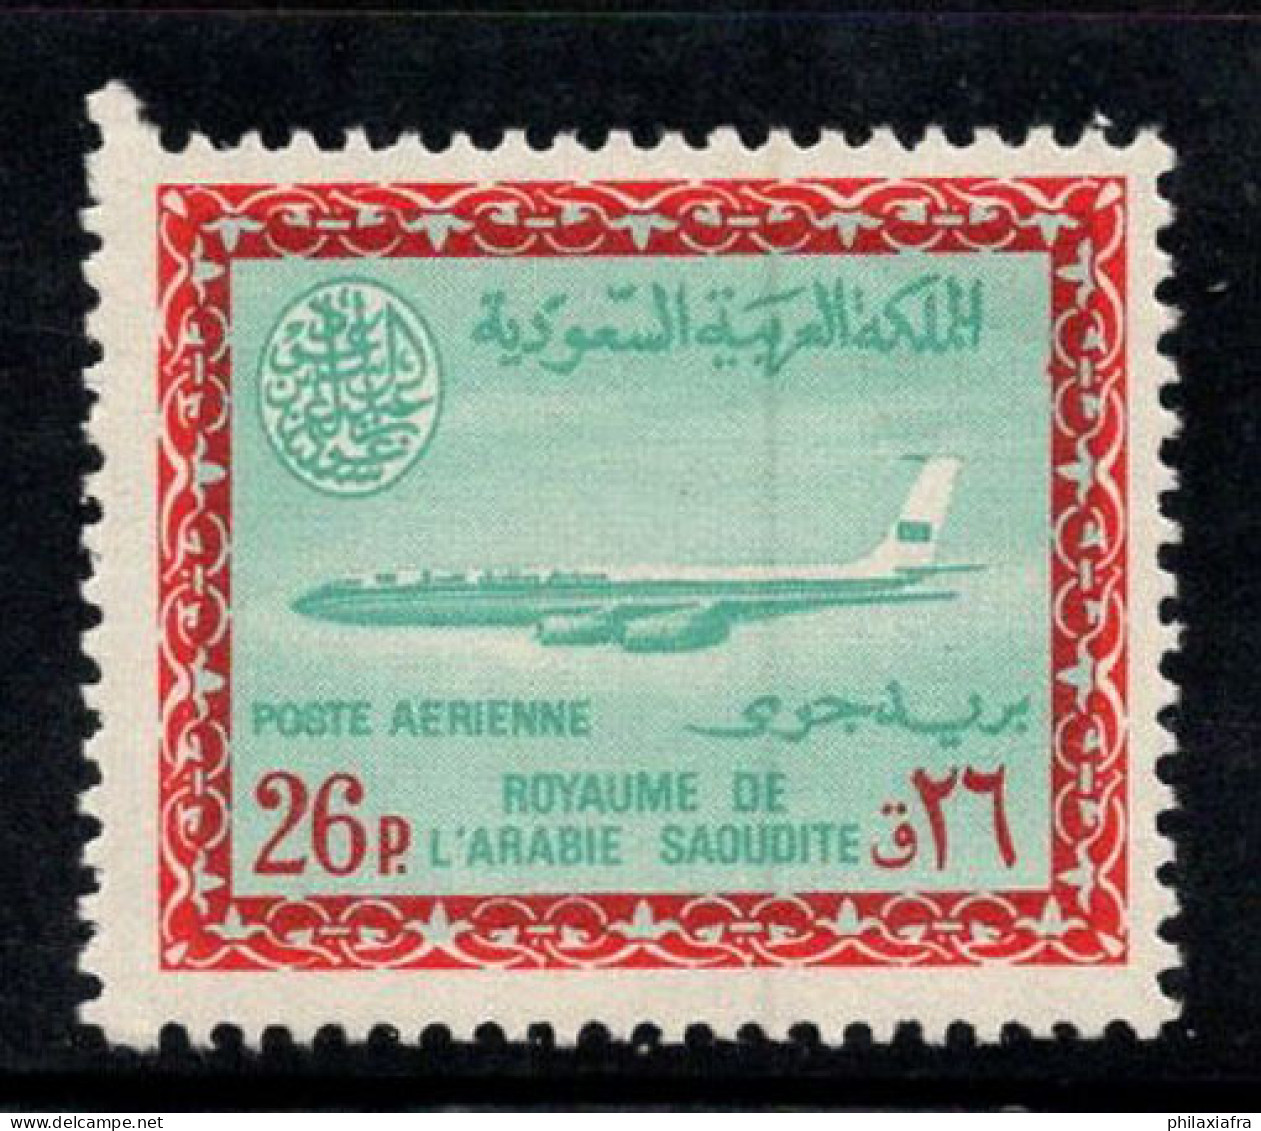 Arabie Saoudite 1965-72 Mi. 263 Neuf ** 100% Poste Aérienne 26 Pia, Boeing 720 B - Arabie Saoudite